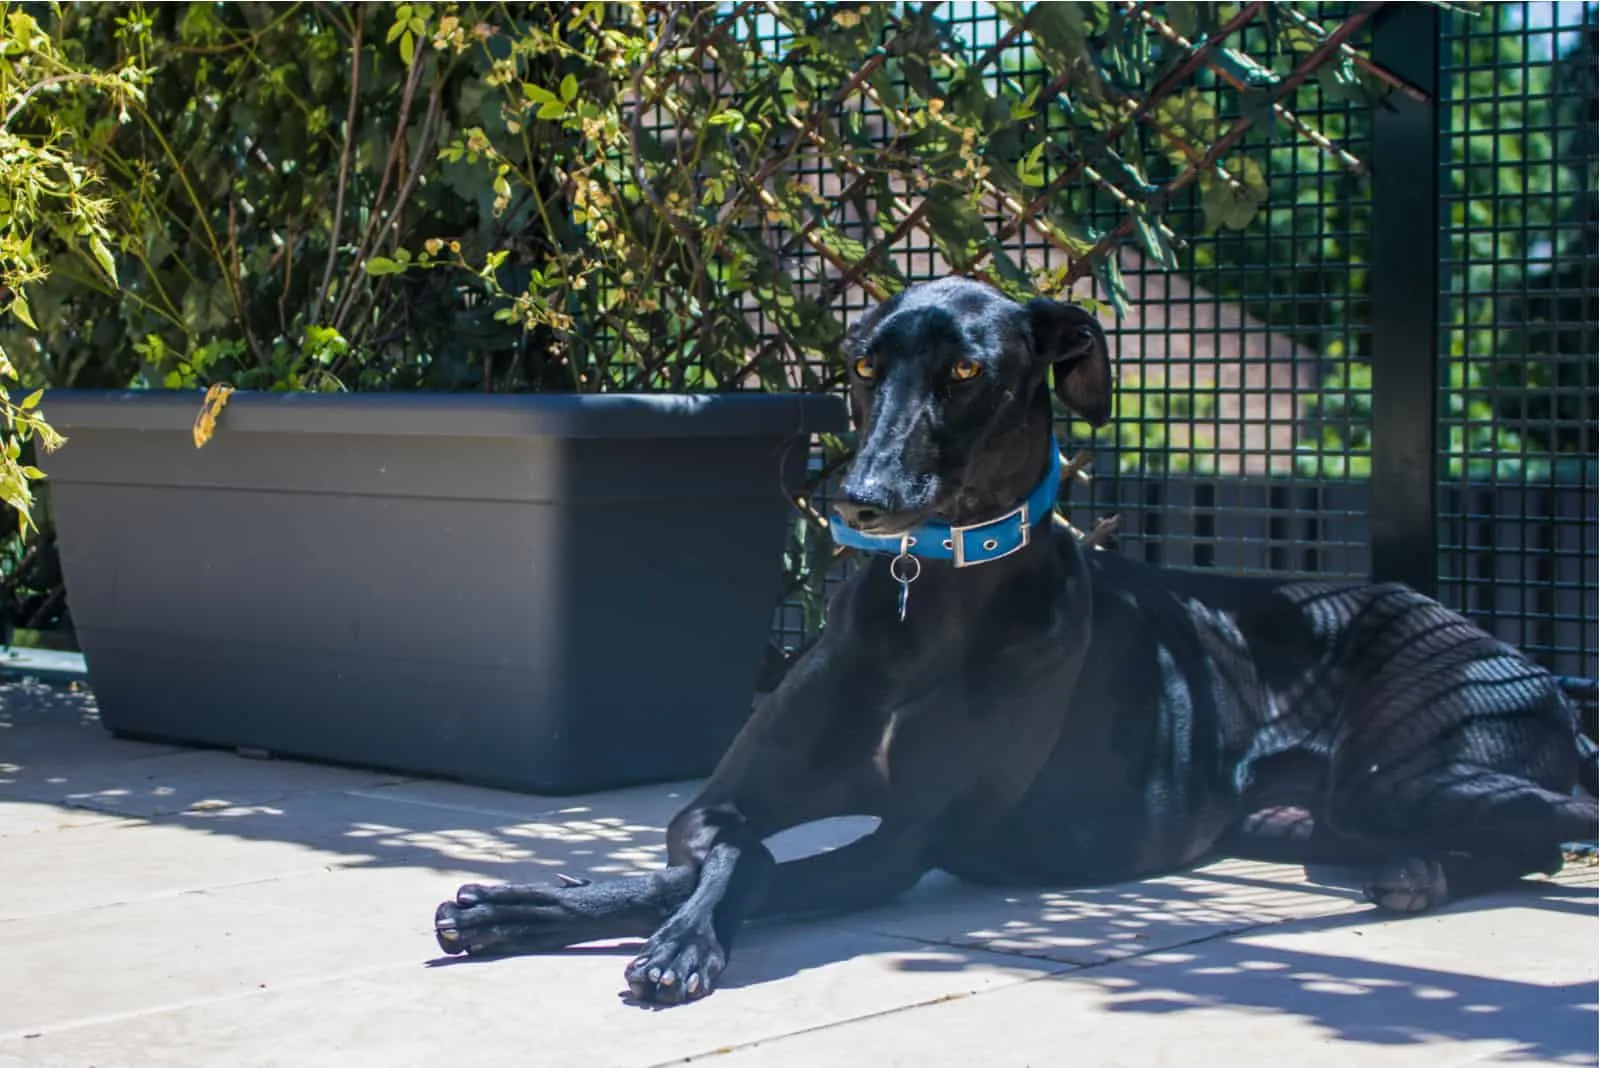 Black greyhound with caramel colored eyes